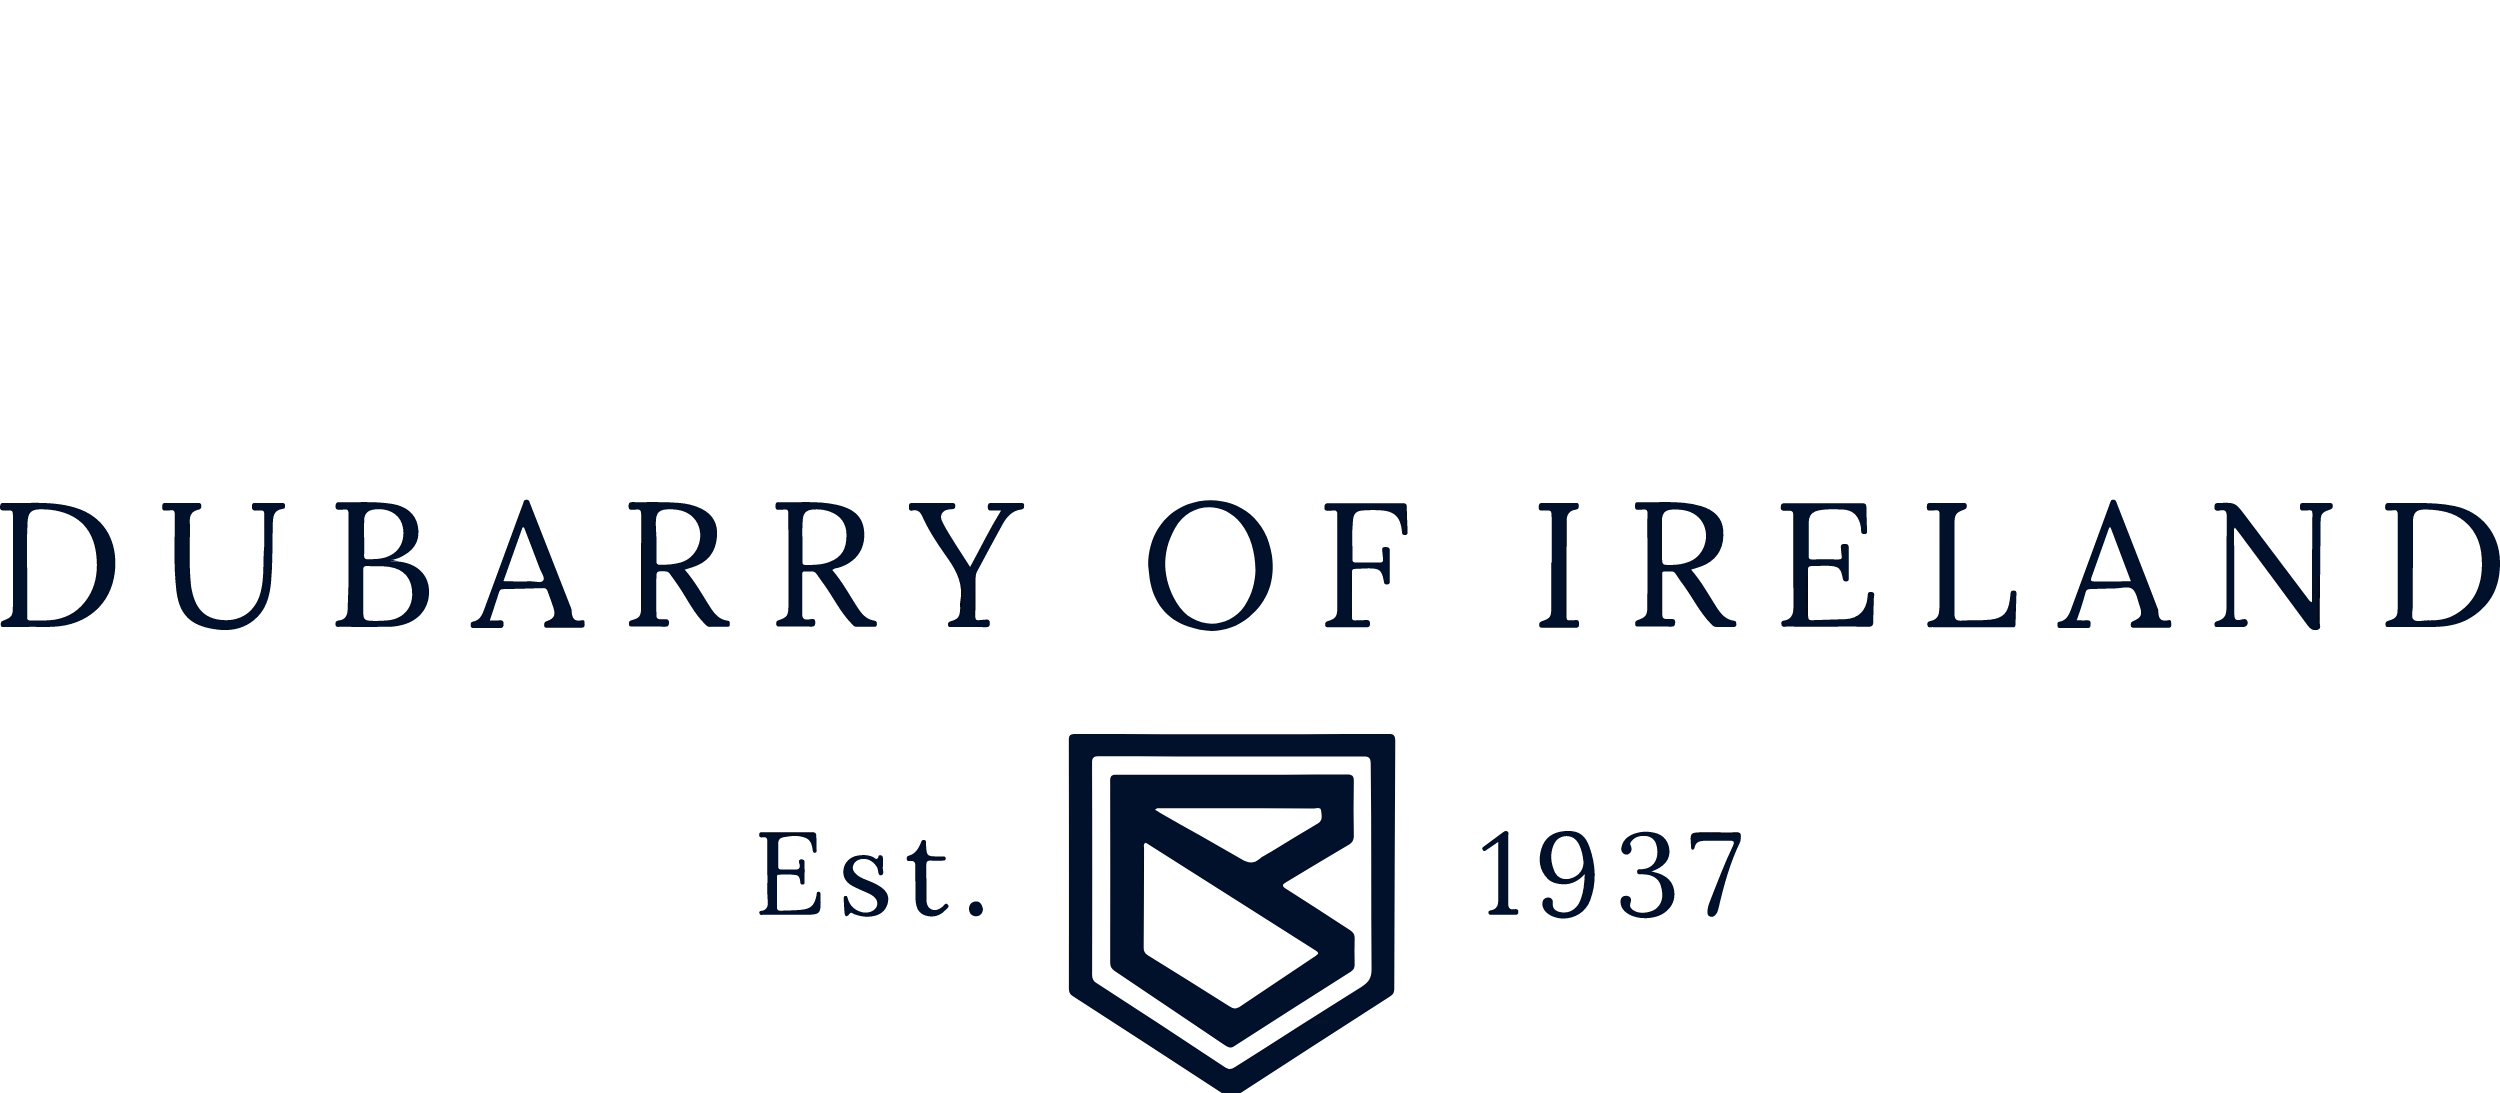 Dubarry of Ireland logo